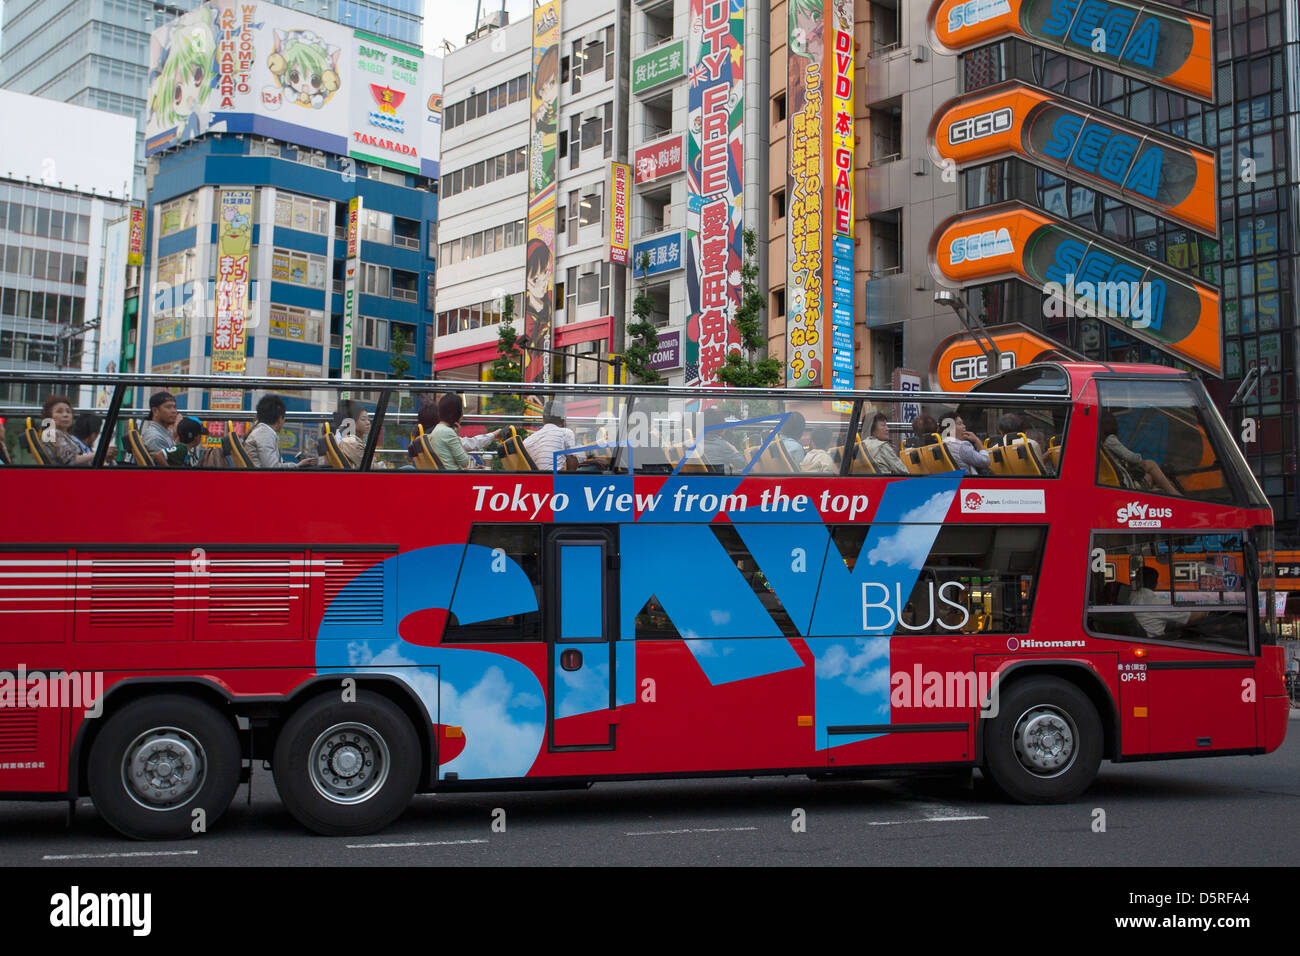 sightseeing bus arrving at Akihabara. Stock Photo